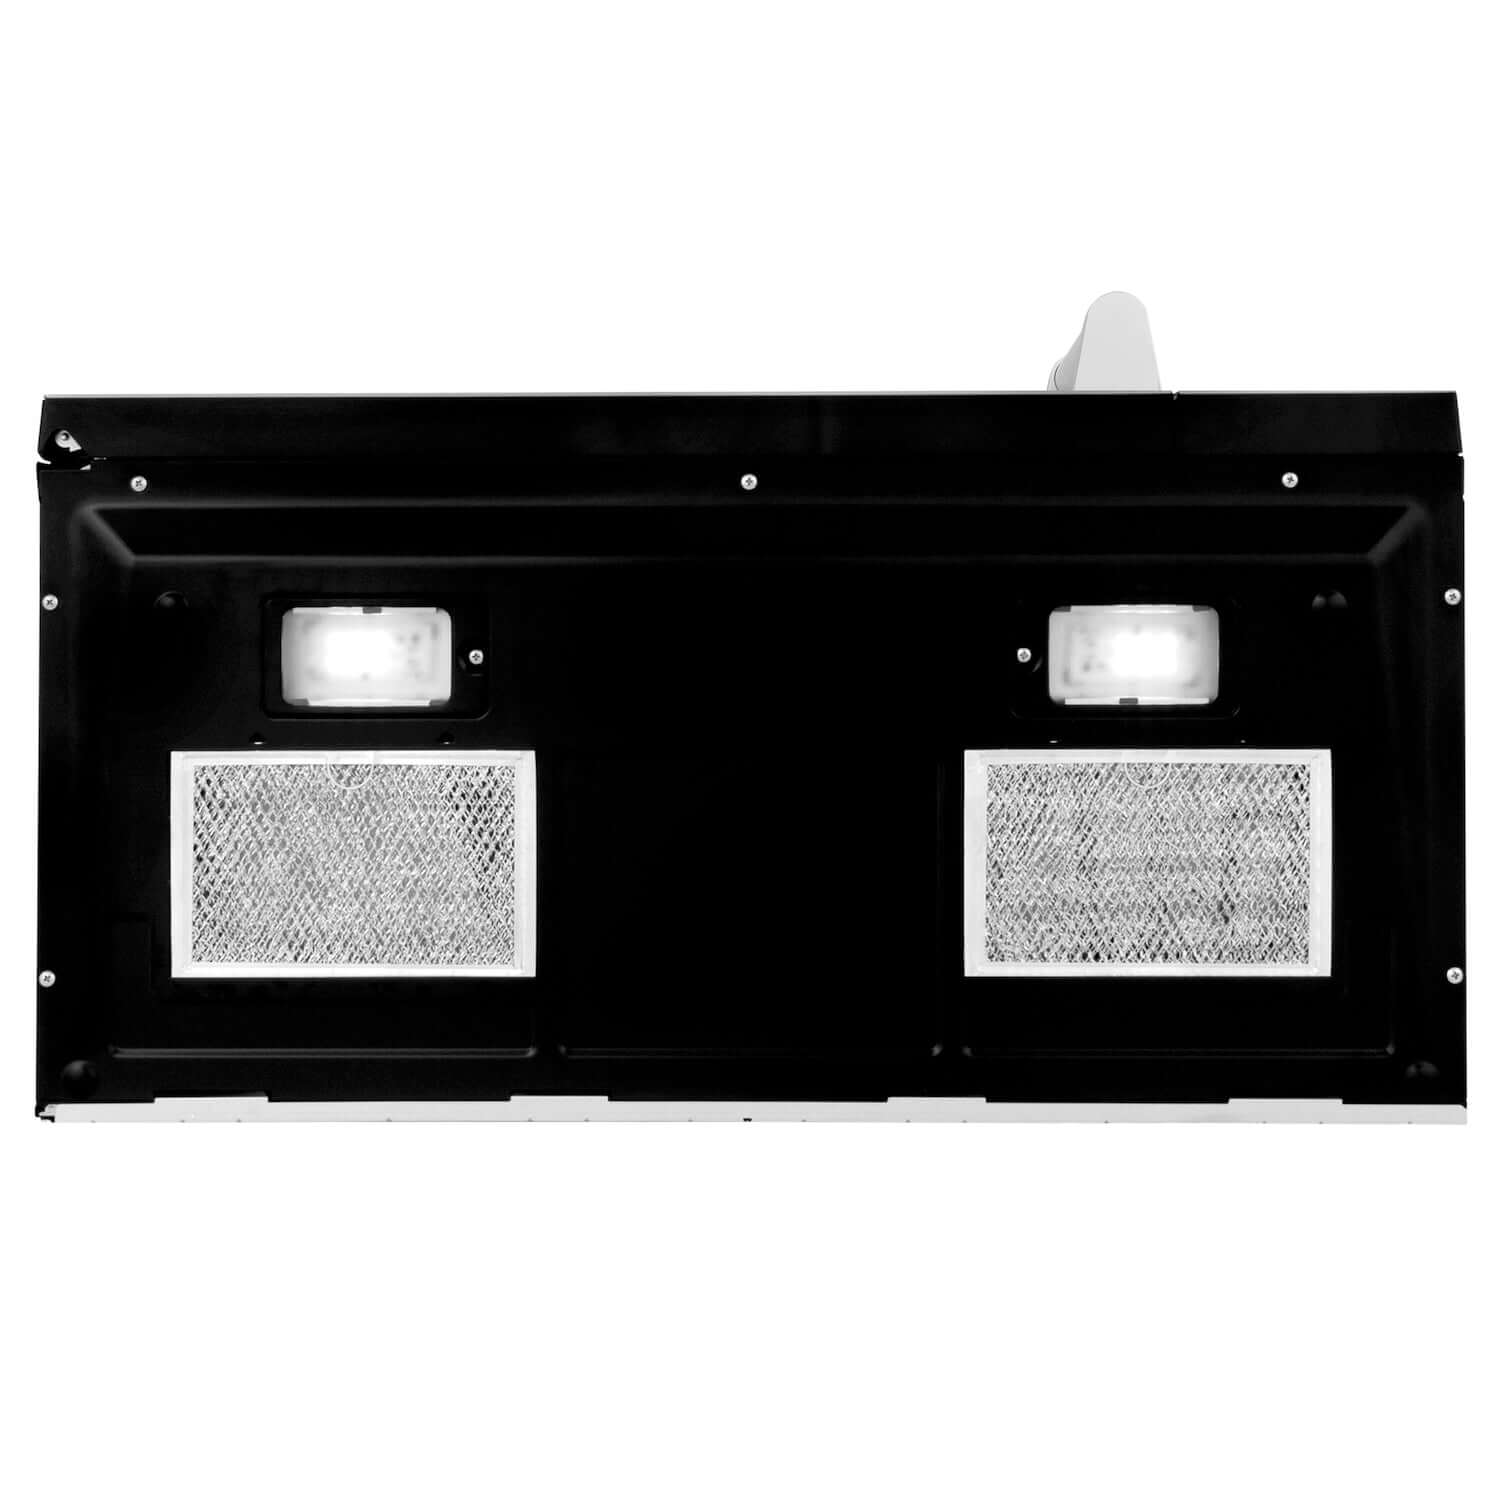 LED cooktop lighting and ventilation on bottom of ZLINE 30" Over the Range Microwave.